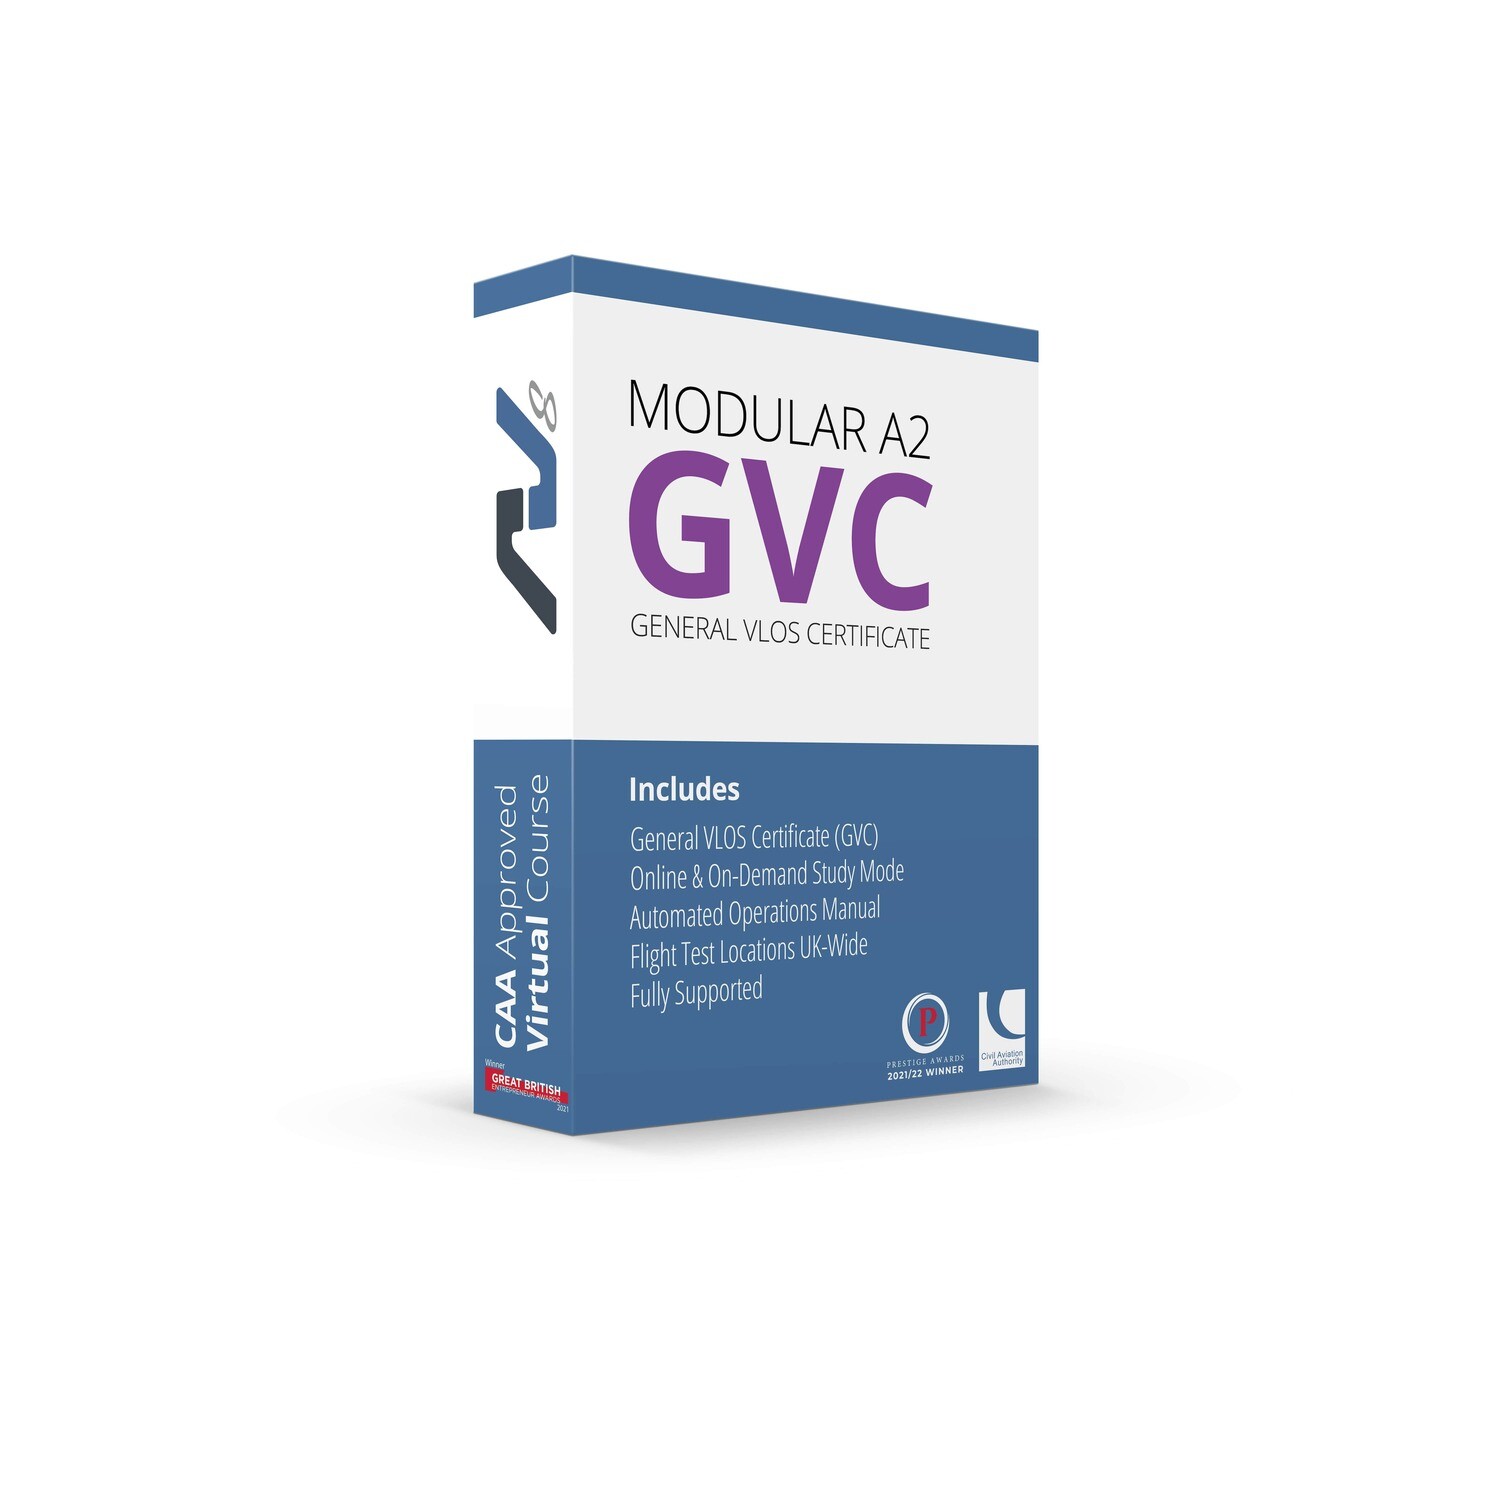 General VLOS Certificate (GVC) - Modular